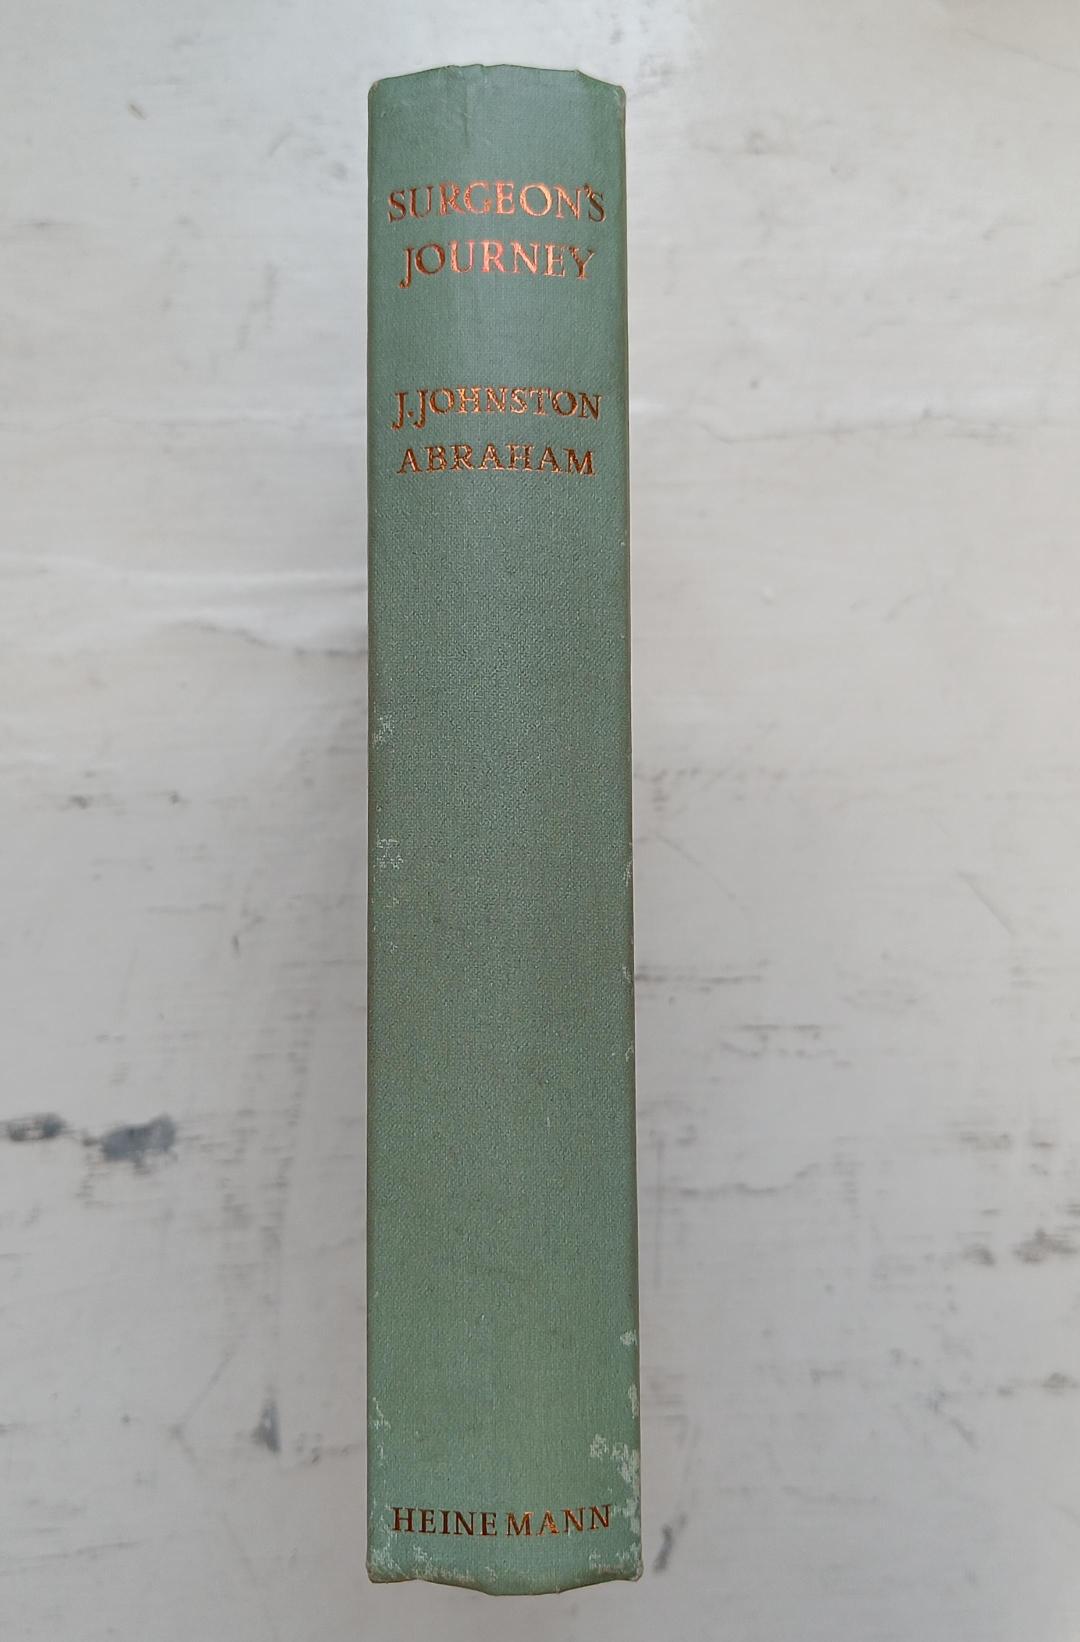 Surgeon's Journey, by J. Johnston Abraham